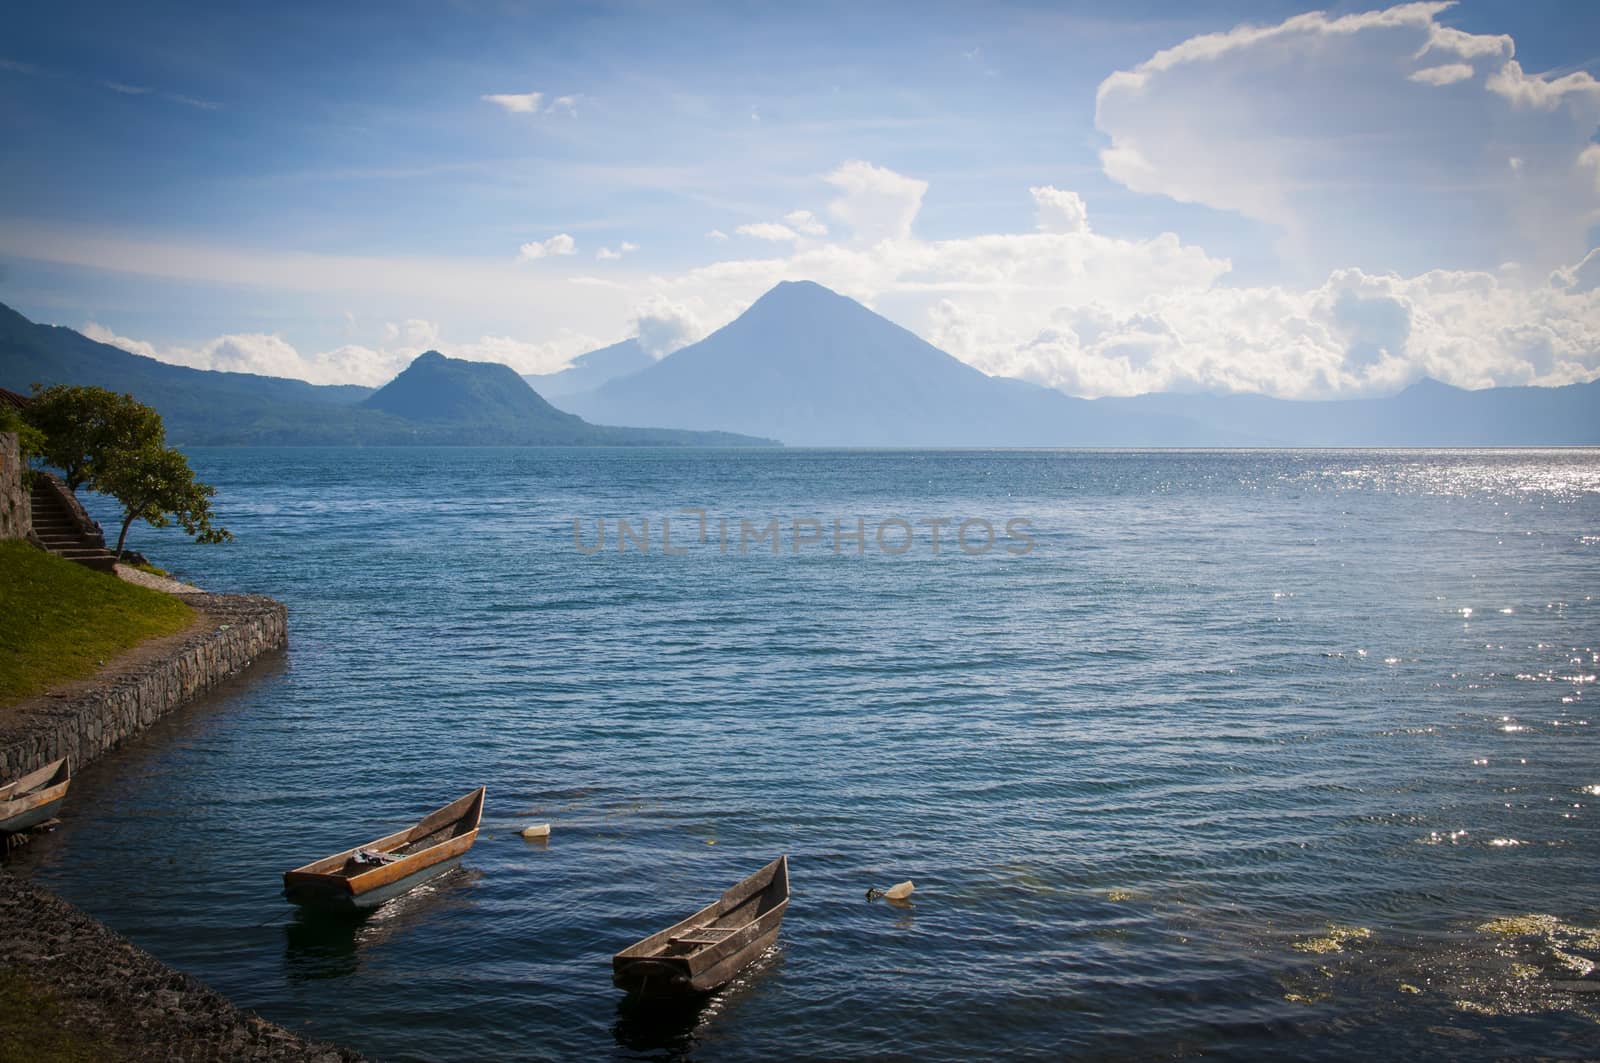 Edge of a lake in Guatemala by Teelahview